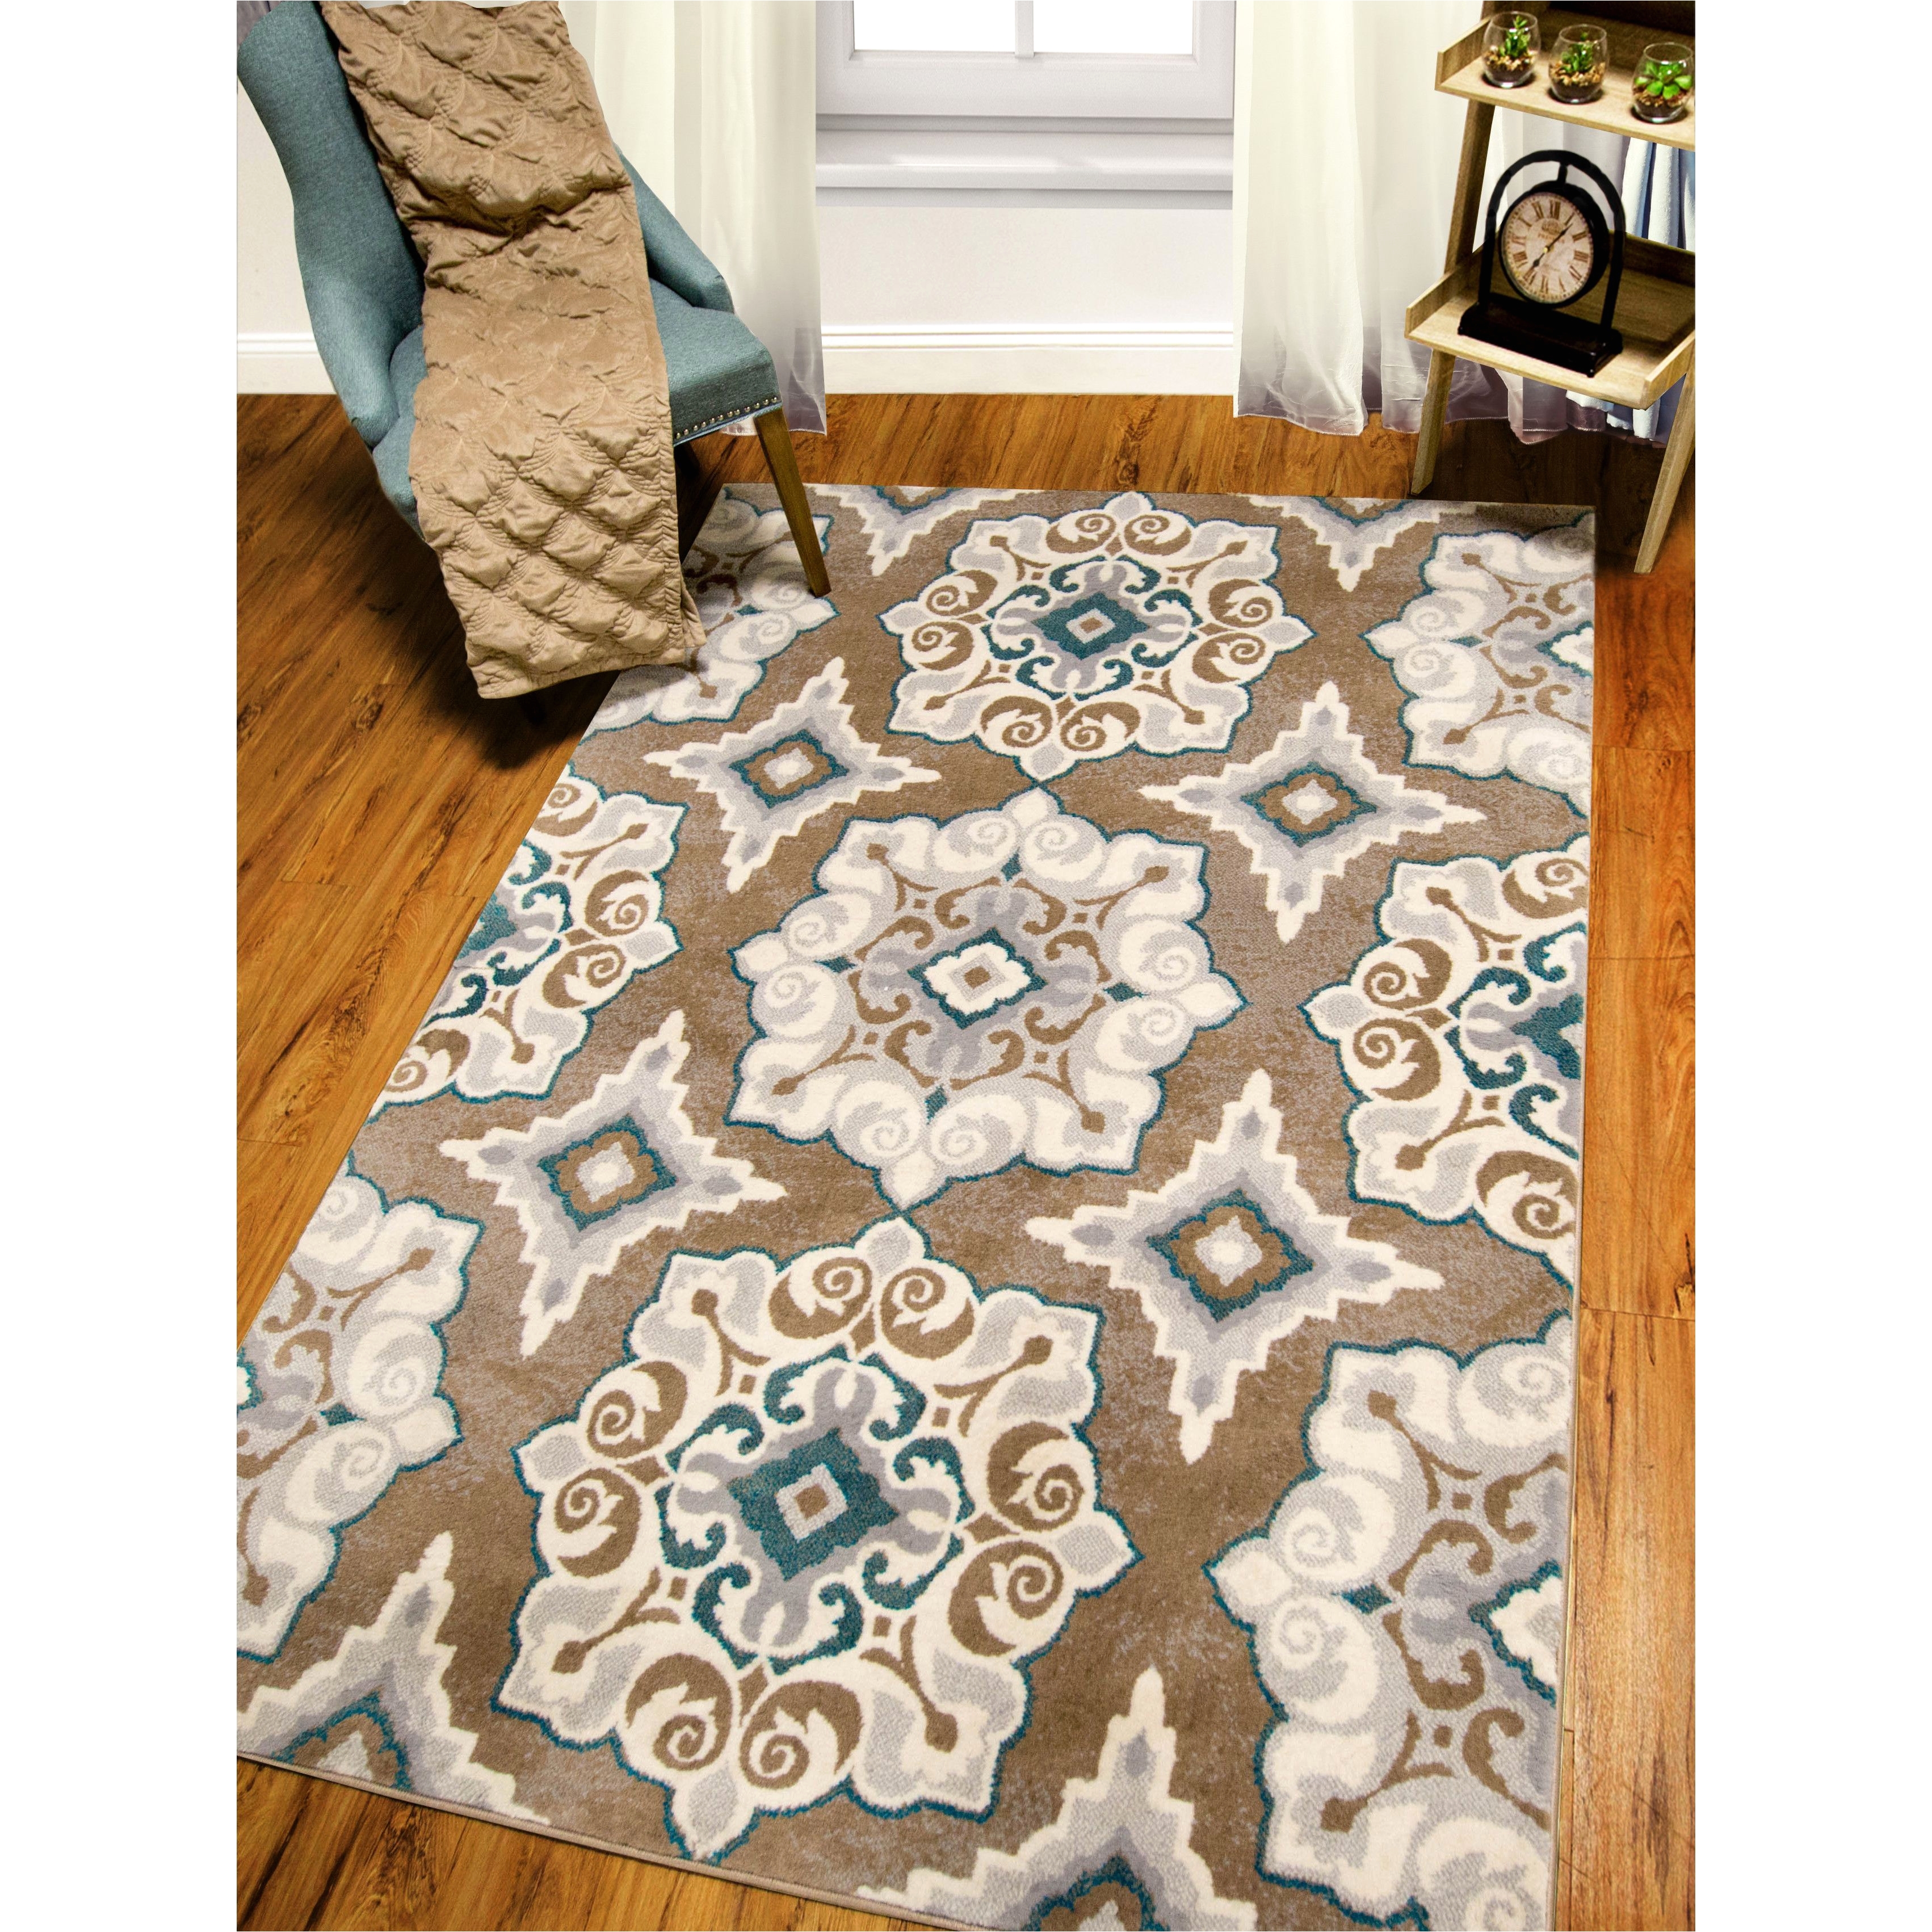 10 x 12 indoor outdoor rugs elegant andover mills natural cerulean blue tan area rug